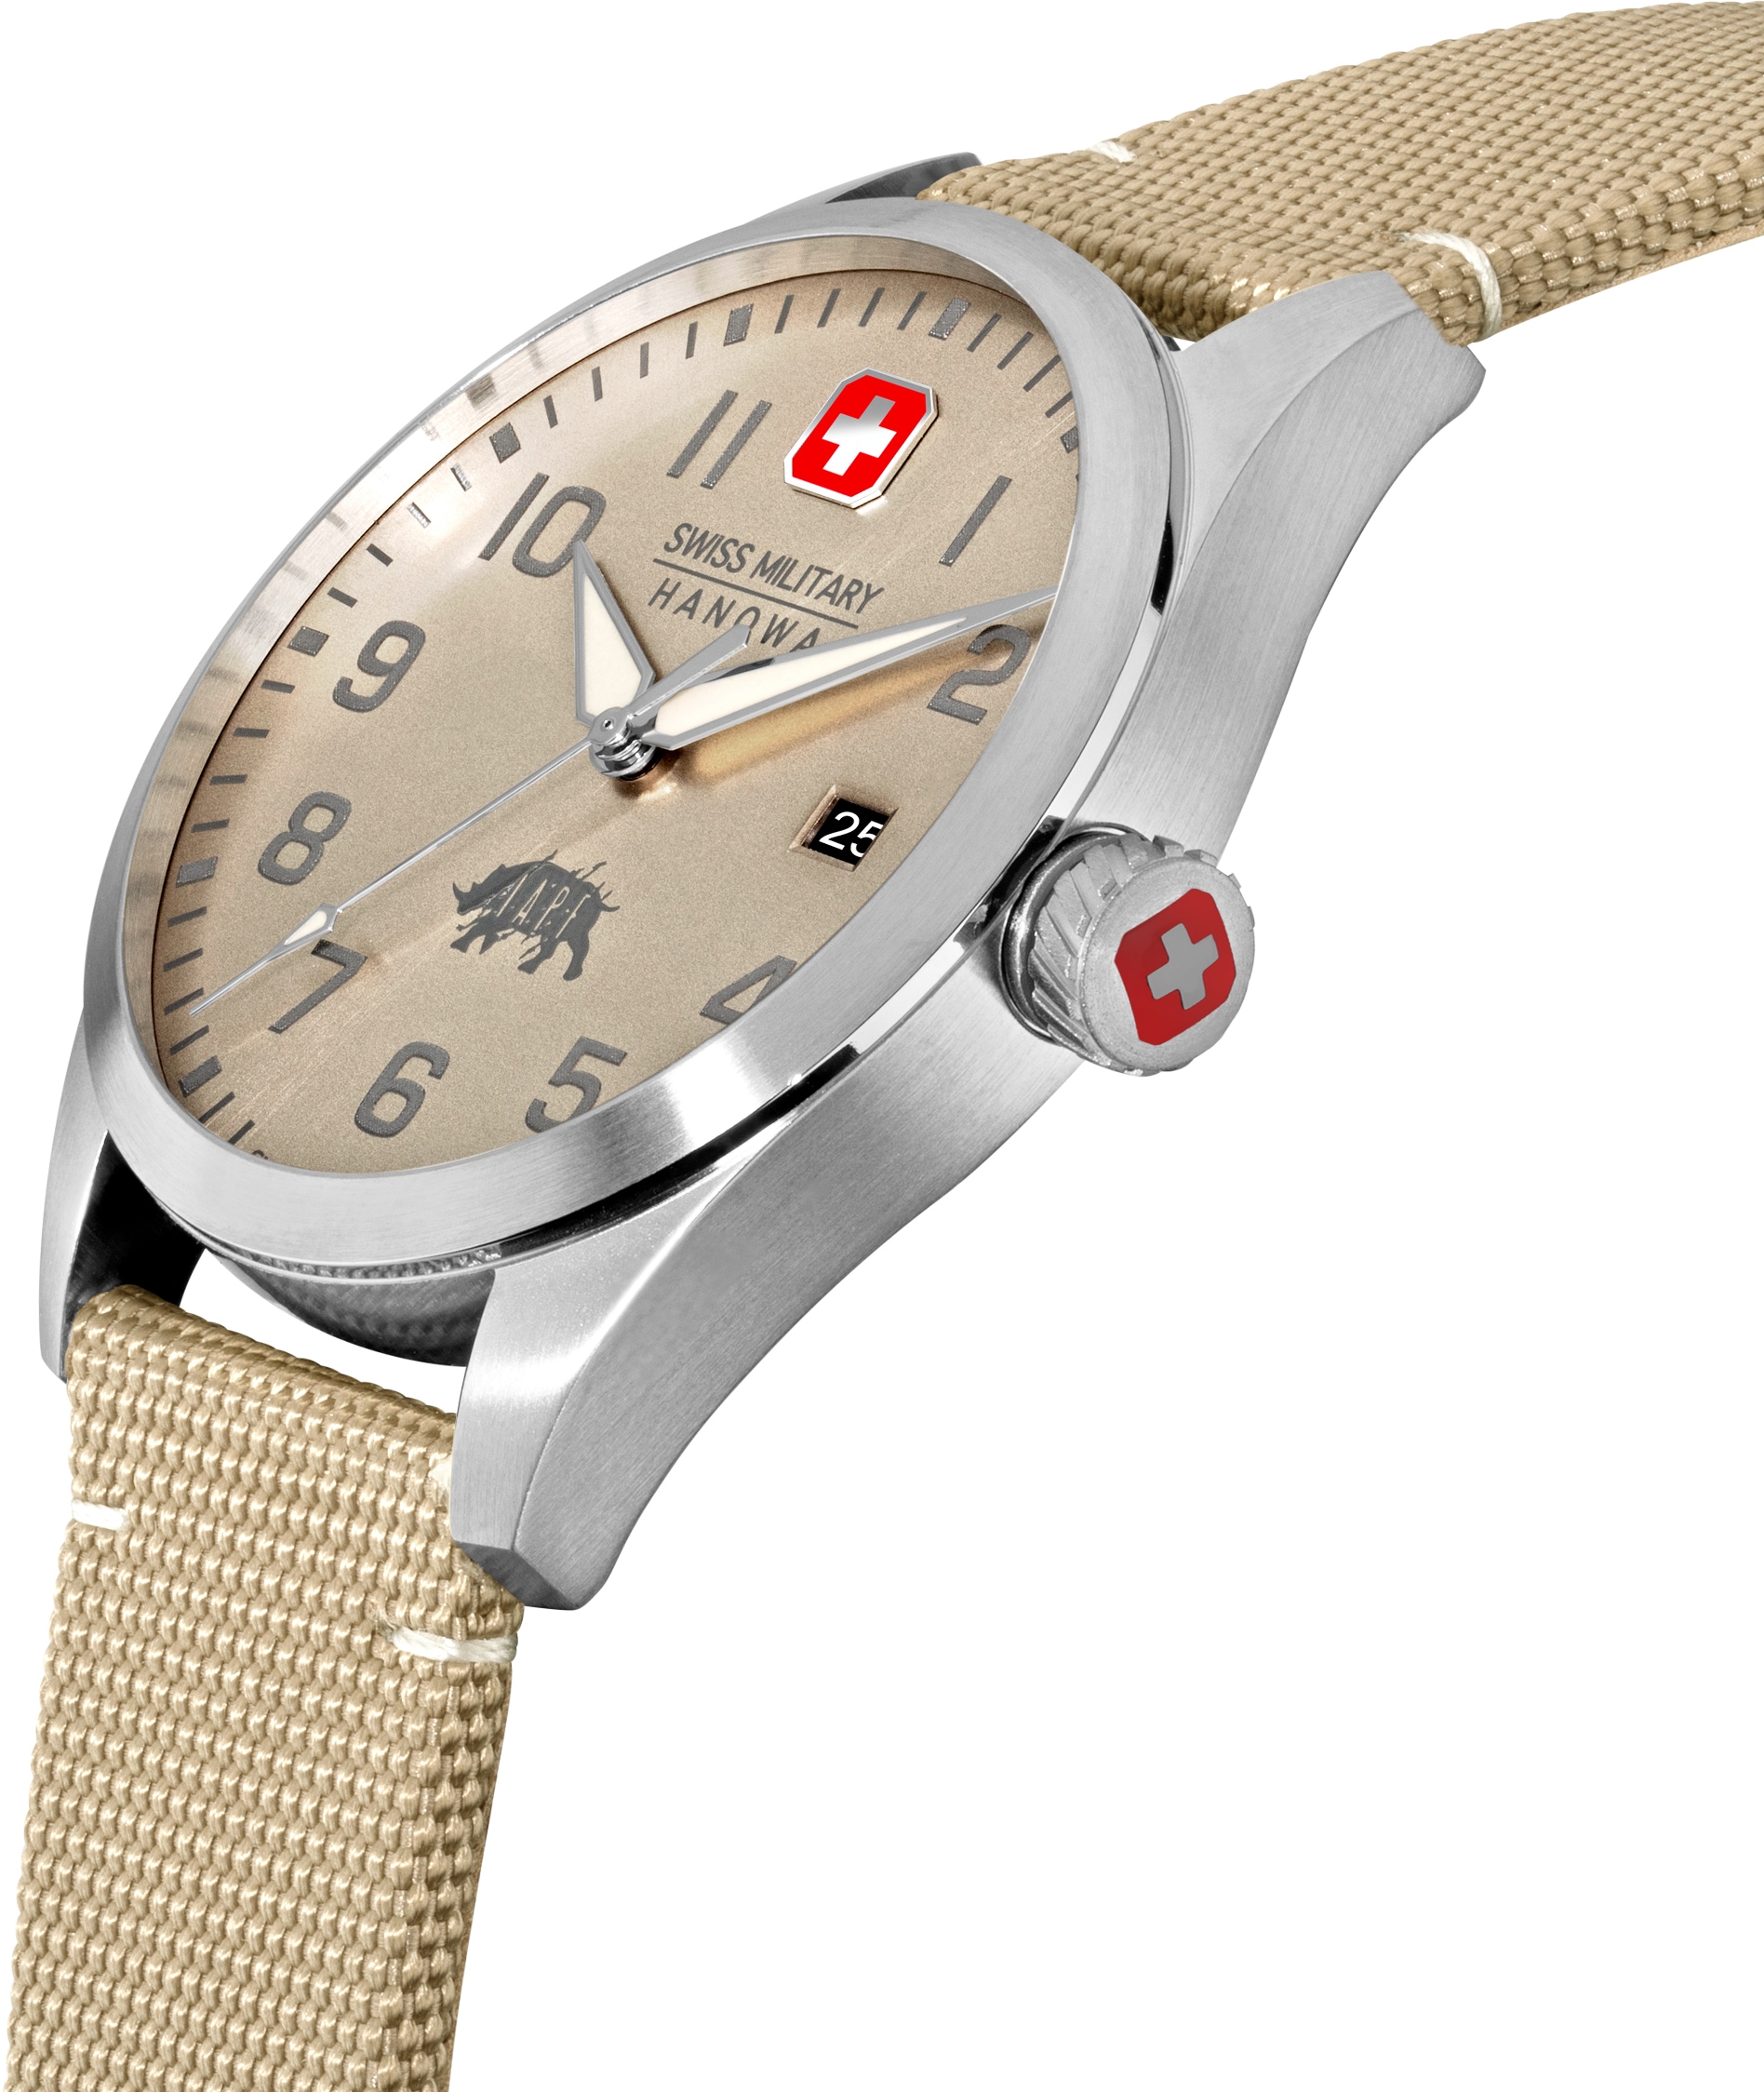 »BUSHMASTER, | Swiss Uhr Hanowa kaufen SMWGN2102301« Military Schweizer walking I\'m online